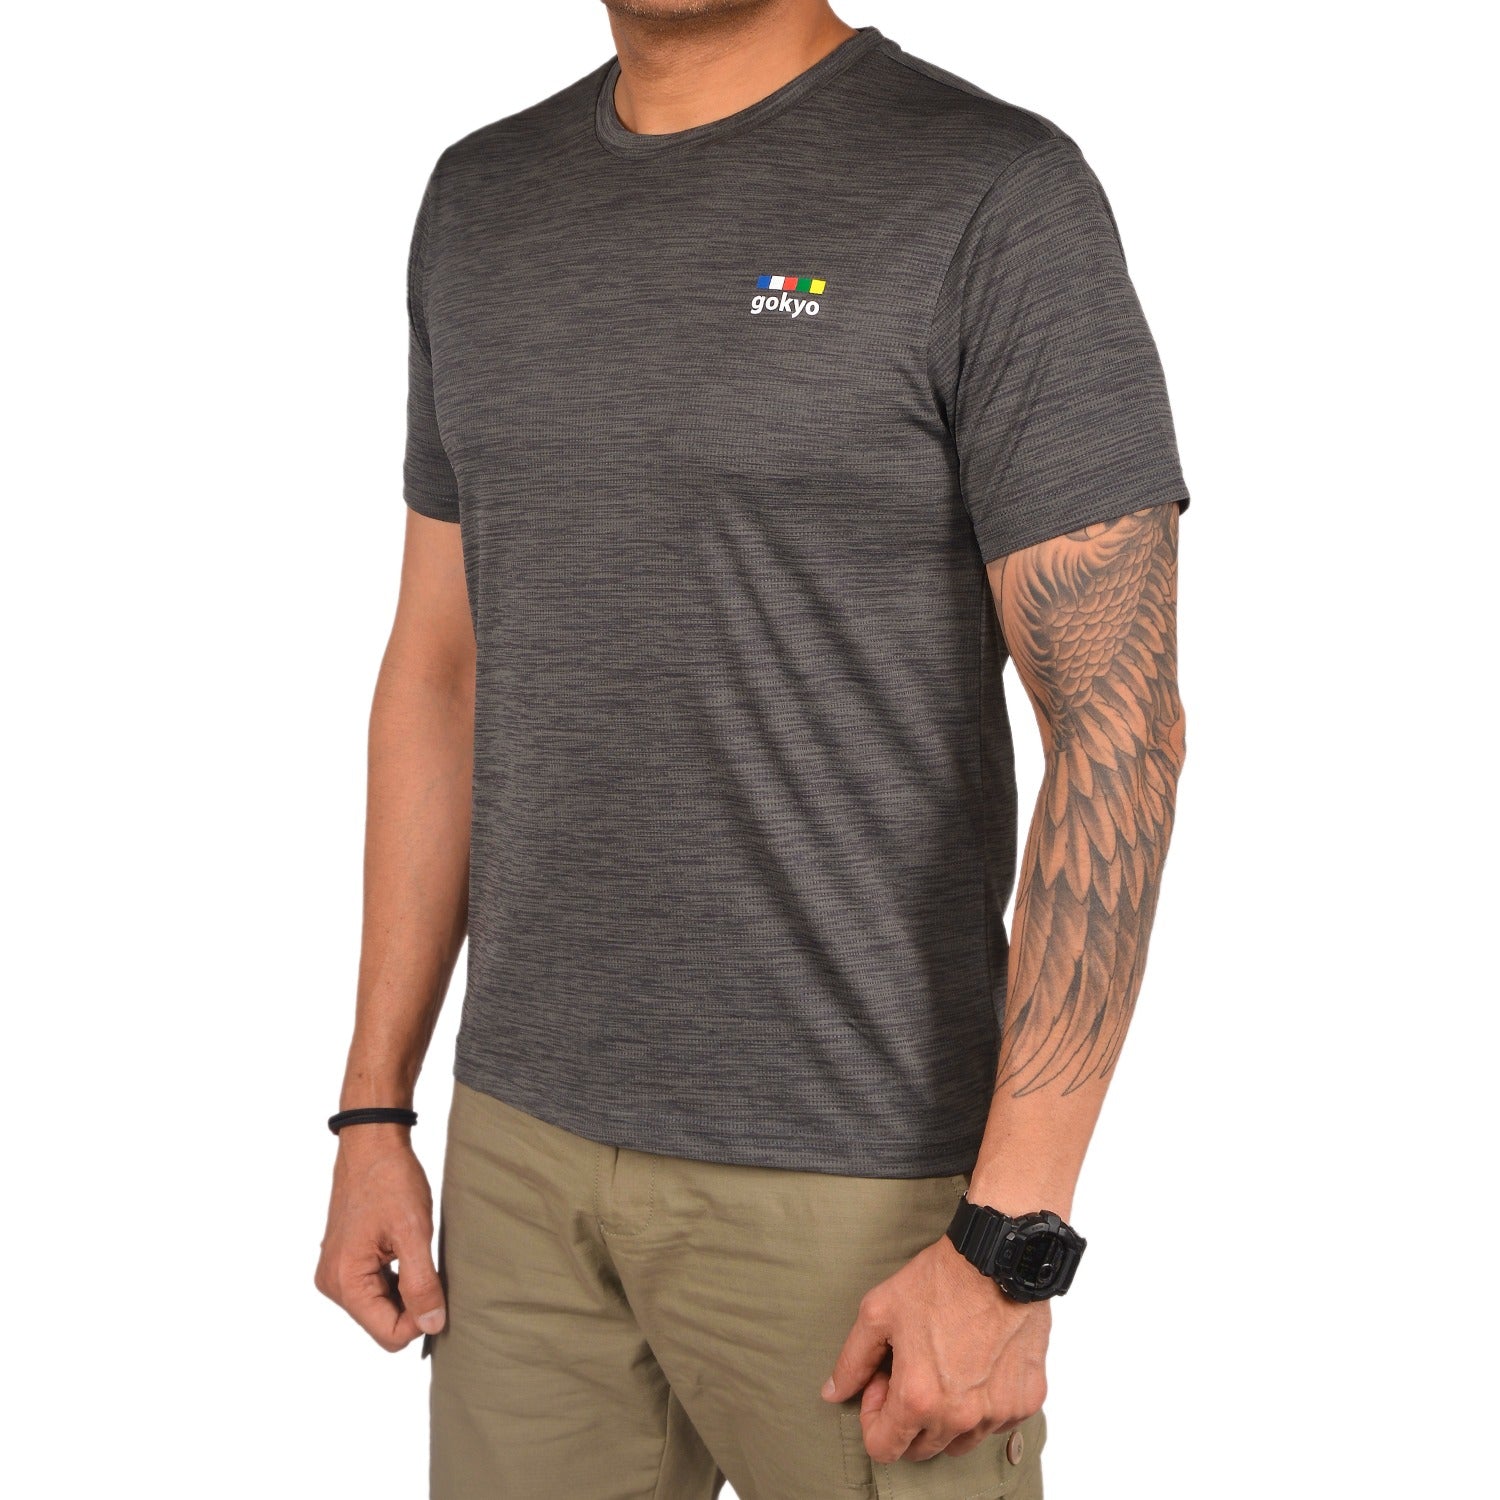 Buy Gokyo COMRADE Running Tshirt | Trekking & Hiking T-shirts at Gokyo Outdoor Clothing & Gear